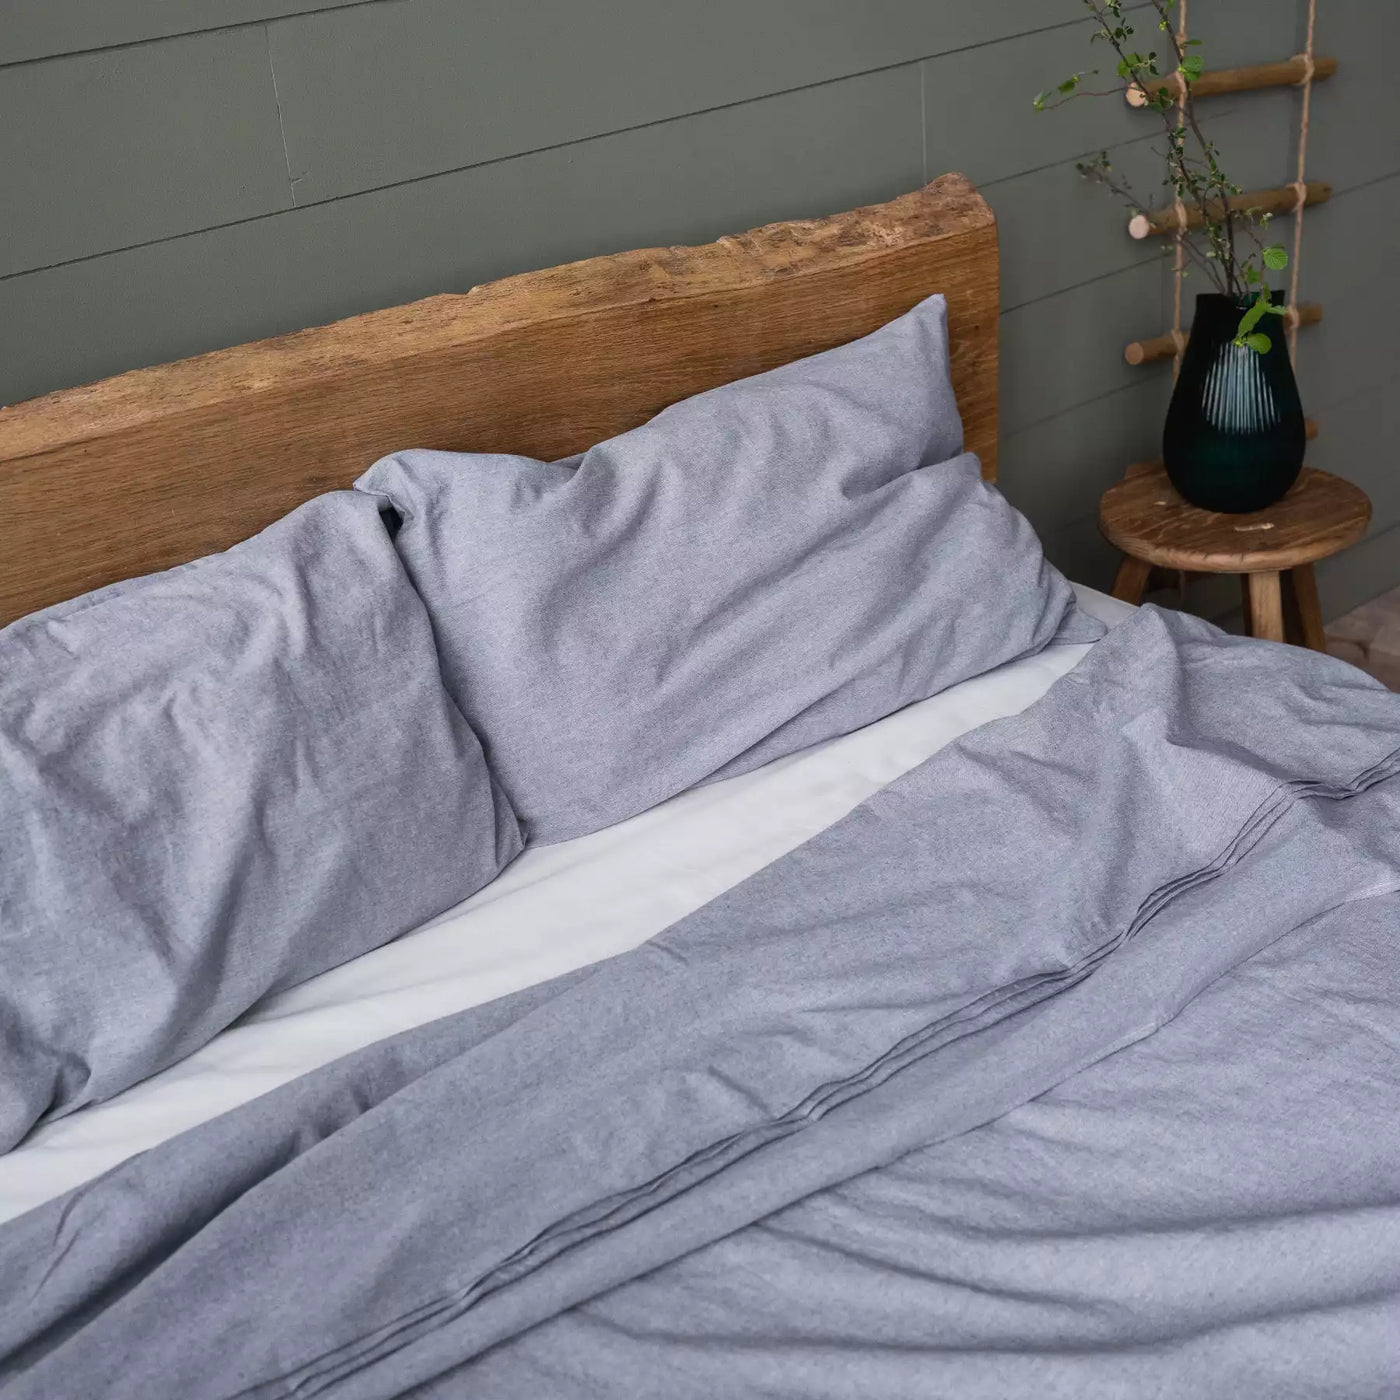 Linen & Cotton bedding set with Duvet cover 135x200 in Graphite Melange